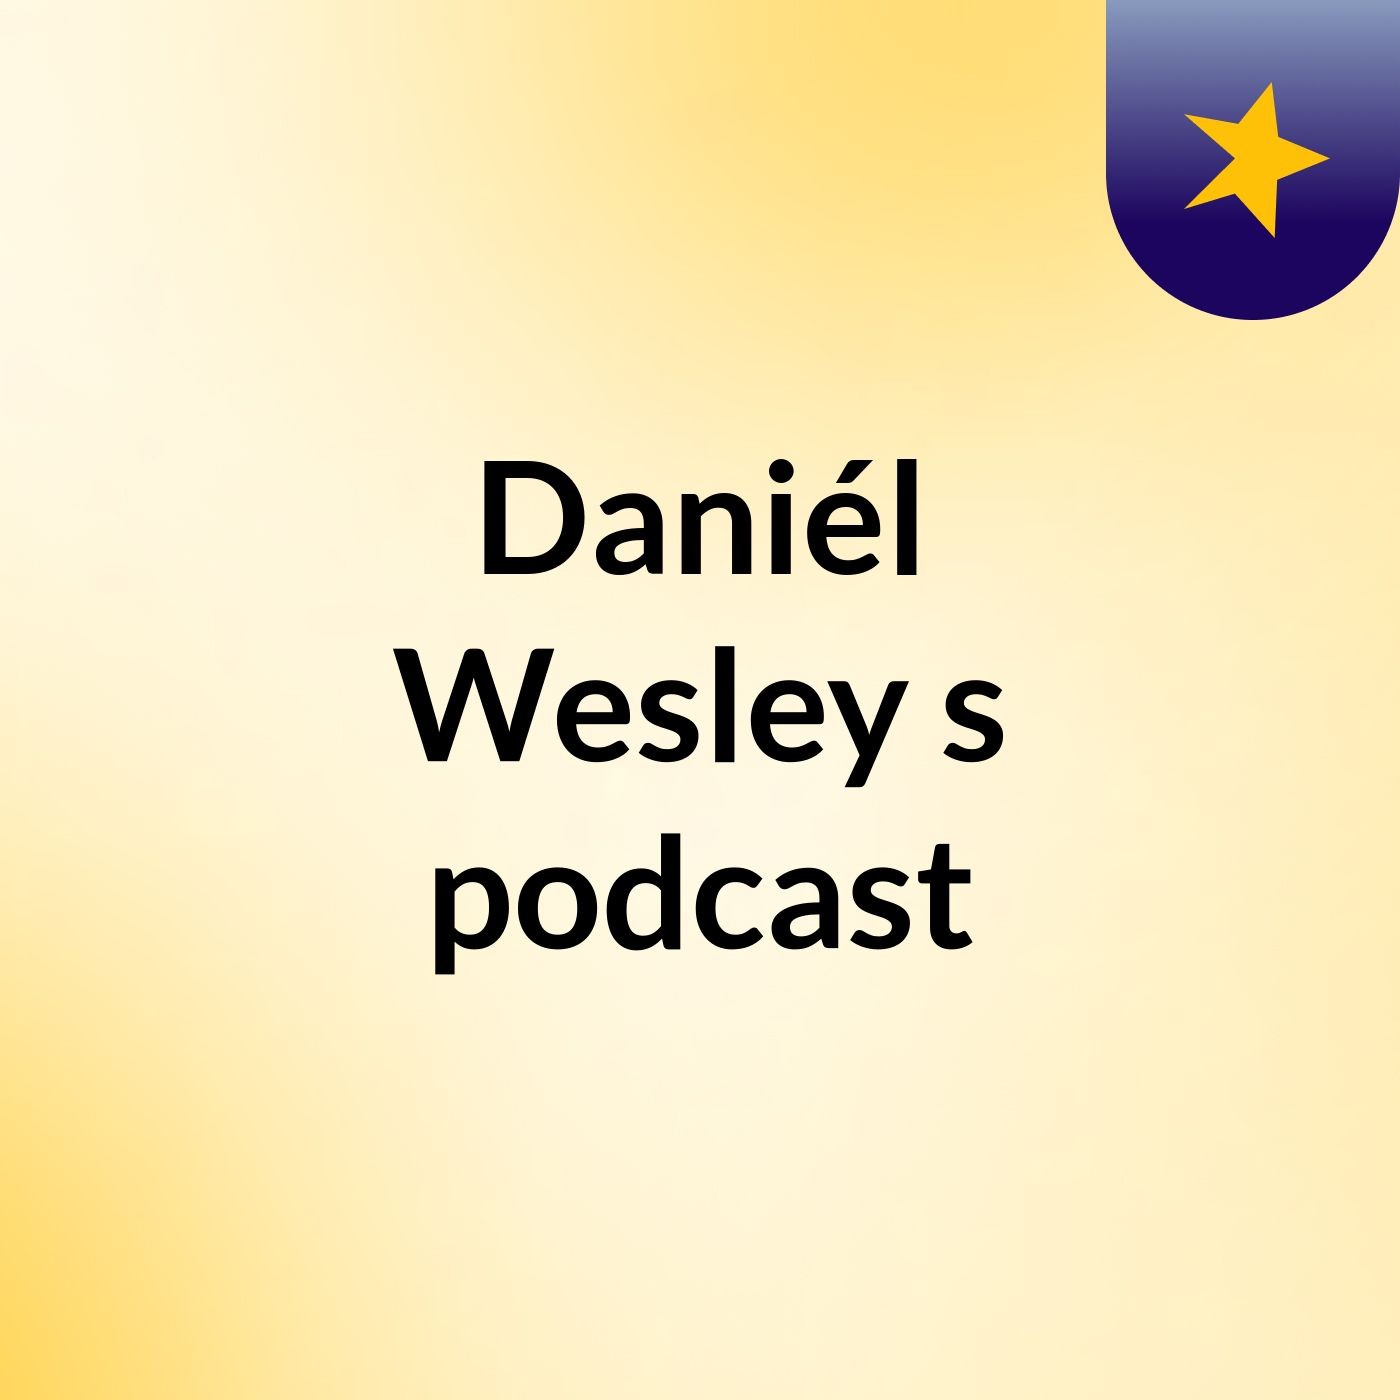 Episode 22 - Daniél Wesley's podcast